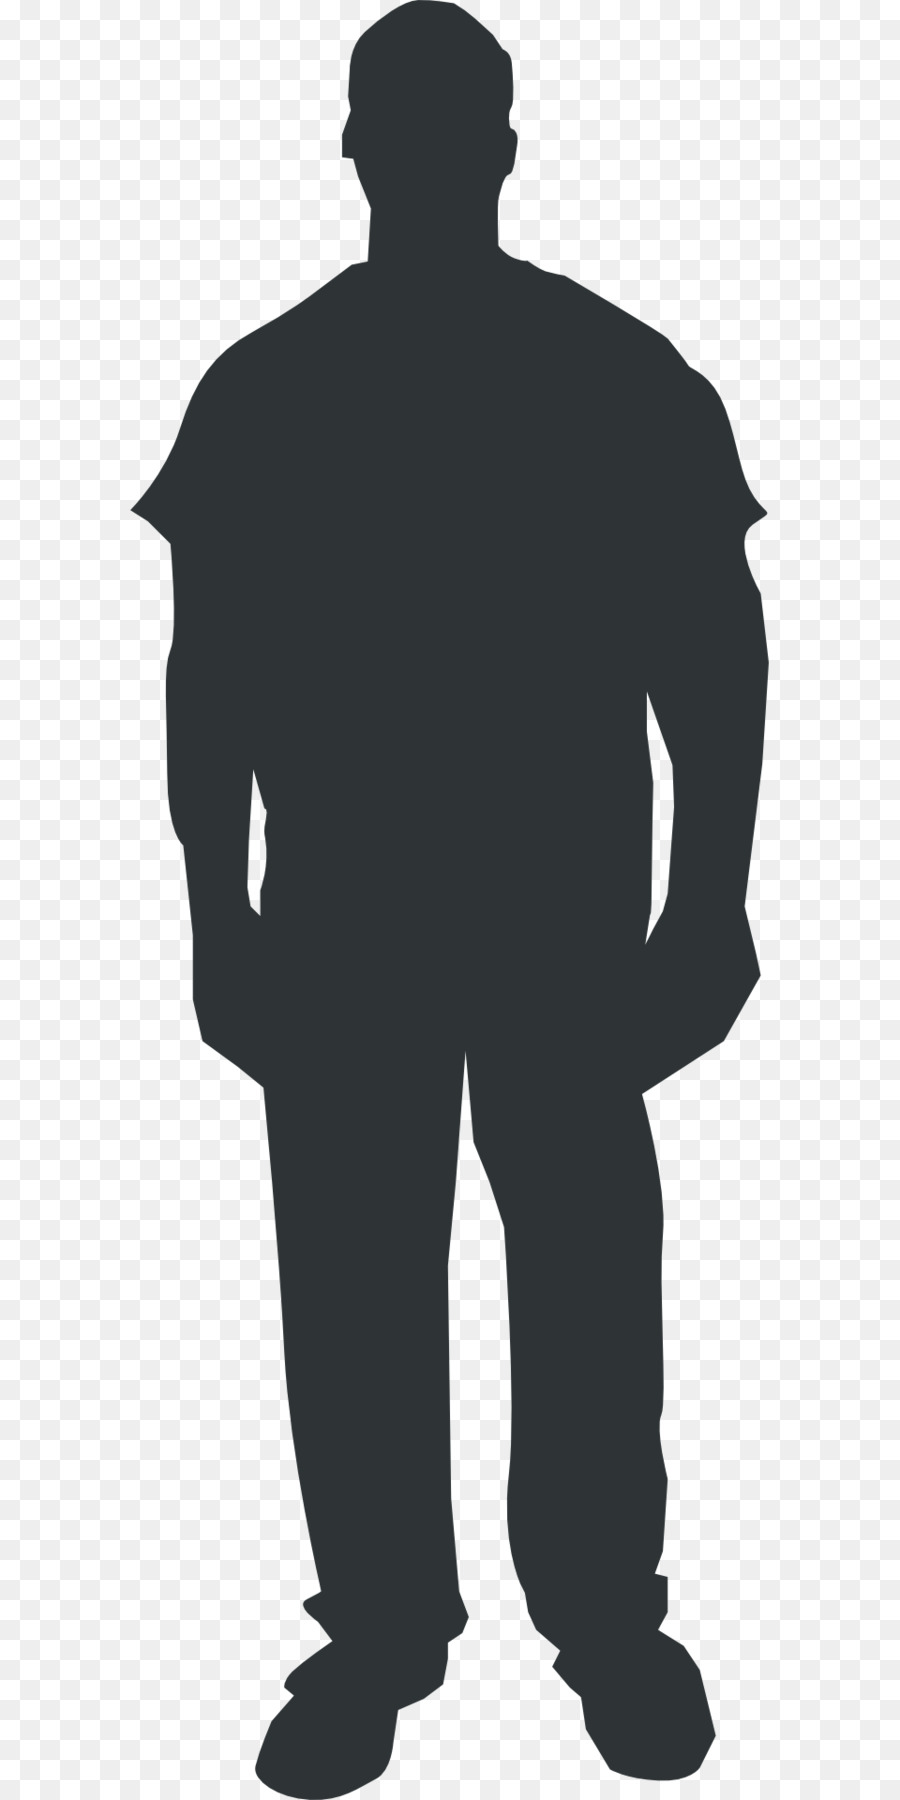 Homo sapiens Person Clip art - silhouette man png download - 960*1920 - Free Transparent Homo Sapiens png Download.